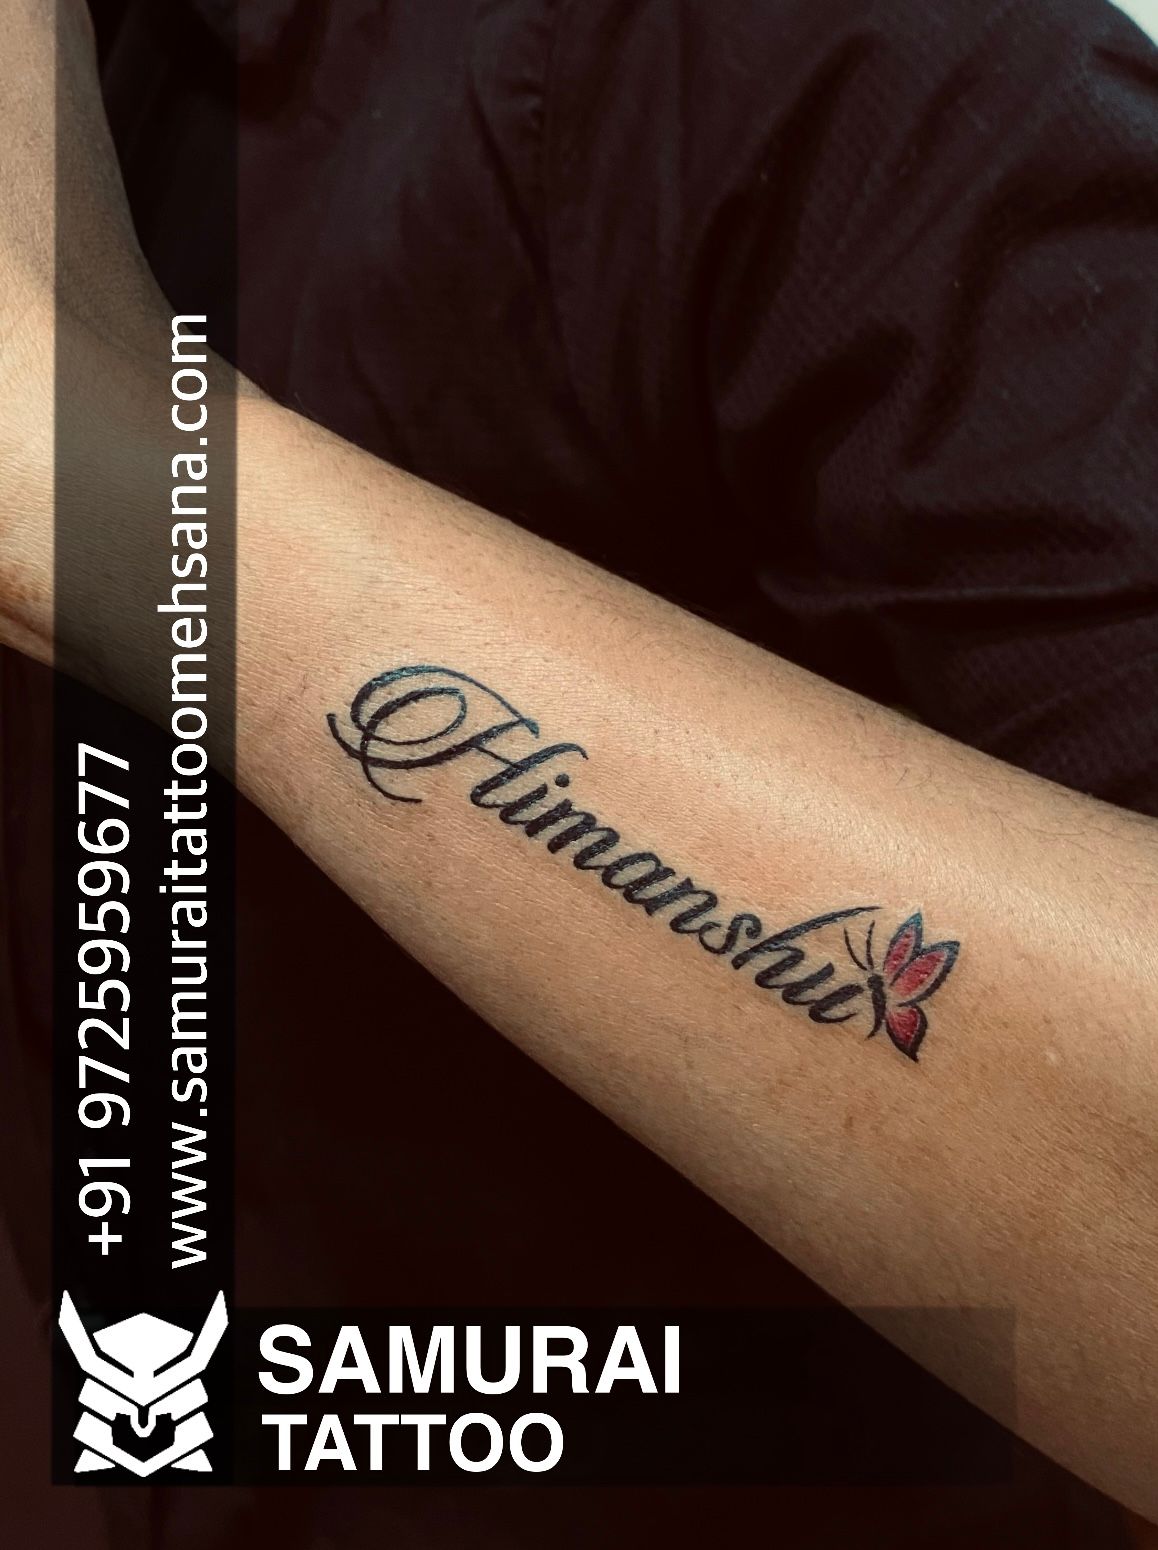 Tattoo uploaded by Vipul Chaudhary • himanshu name tattoo ...